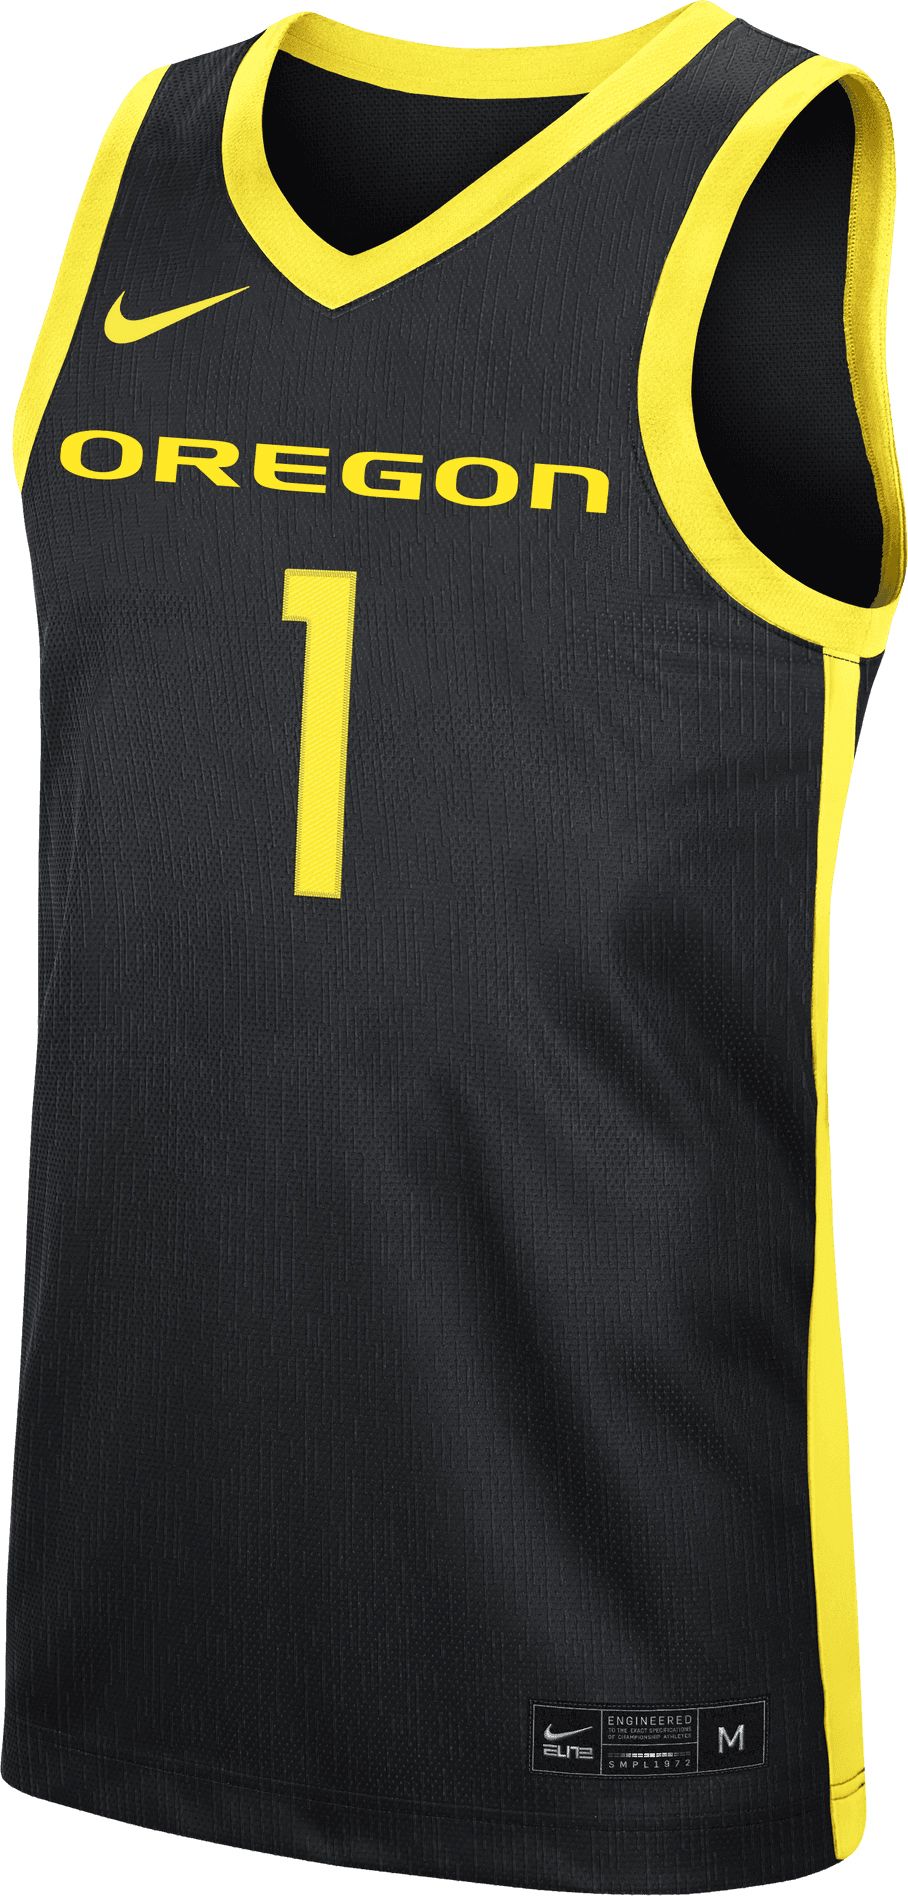 Nike Men's Oregon Ducks #1 Black Dri-FIT Replica Basketball Jersey